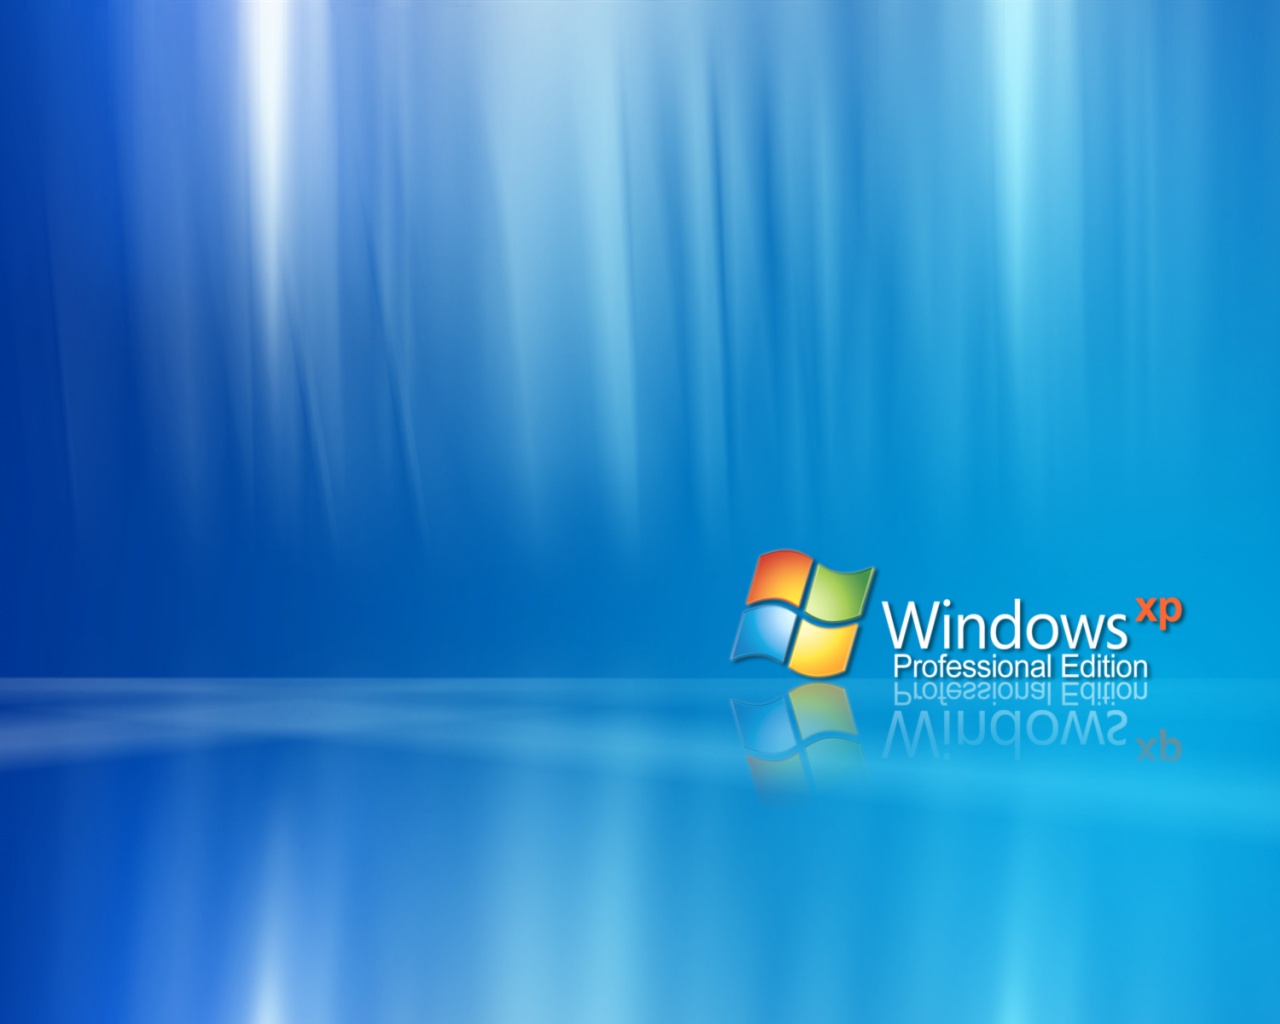 Windows Xp Pro Desktop Pc And Mac Wallpaper